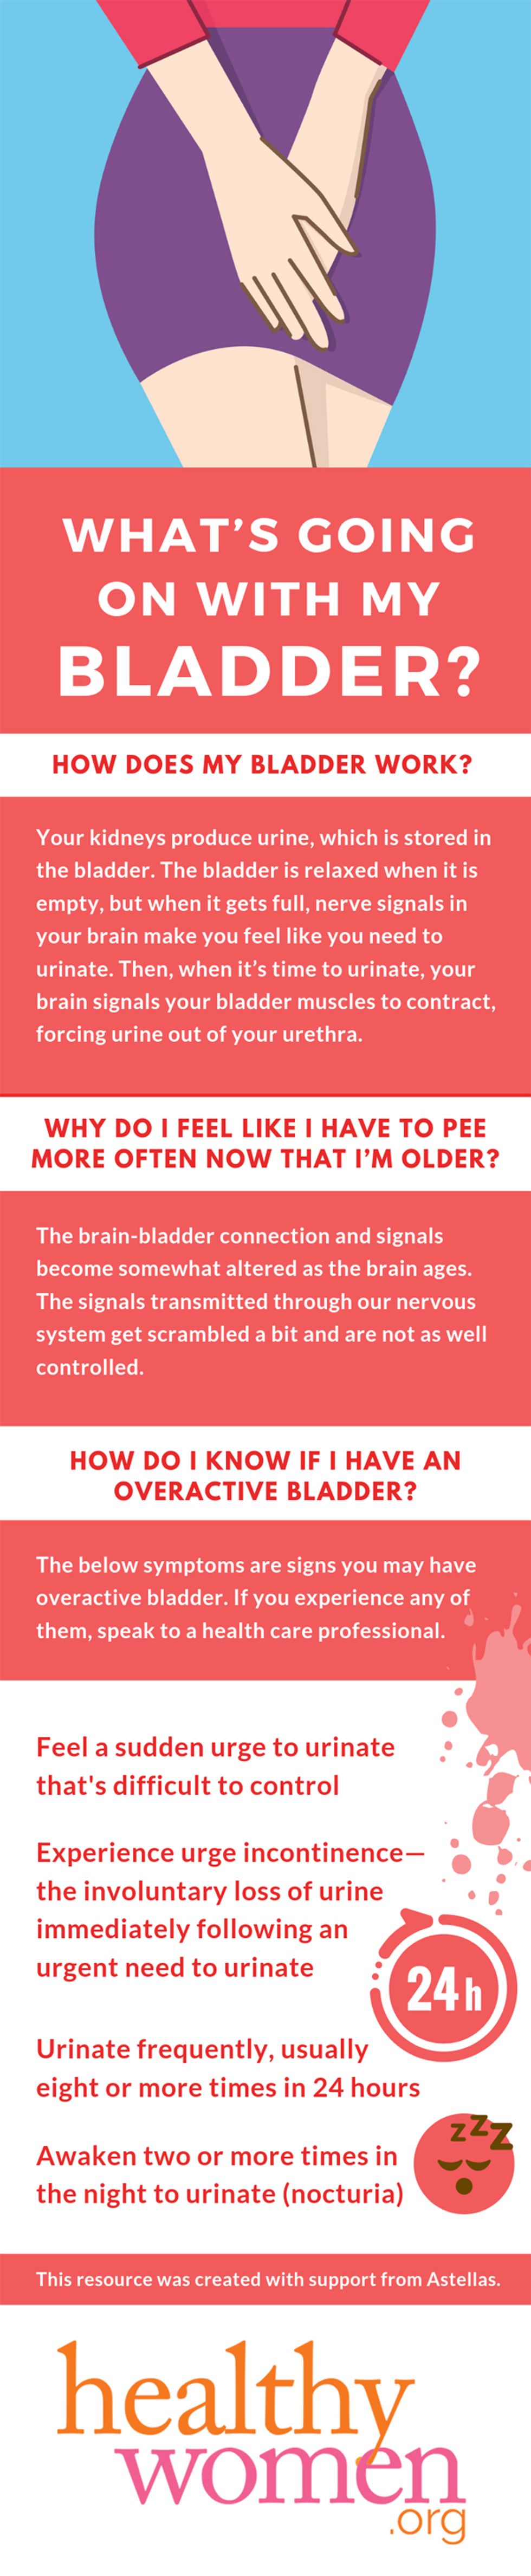 Symptoms & Causes of Bladder Control Problems (Urinary